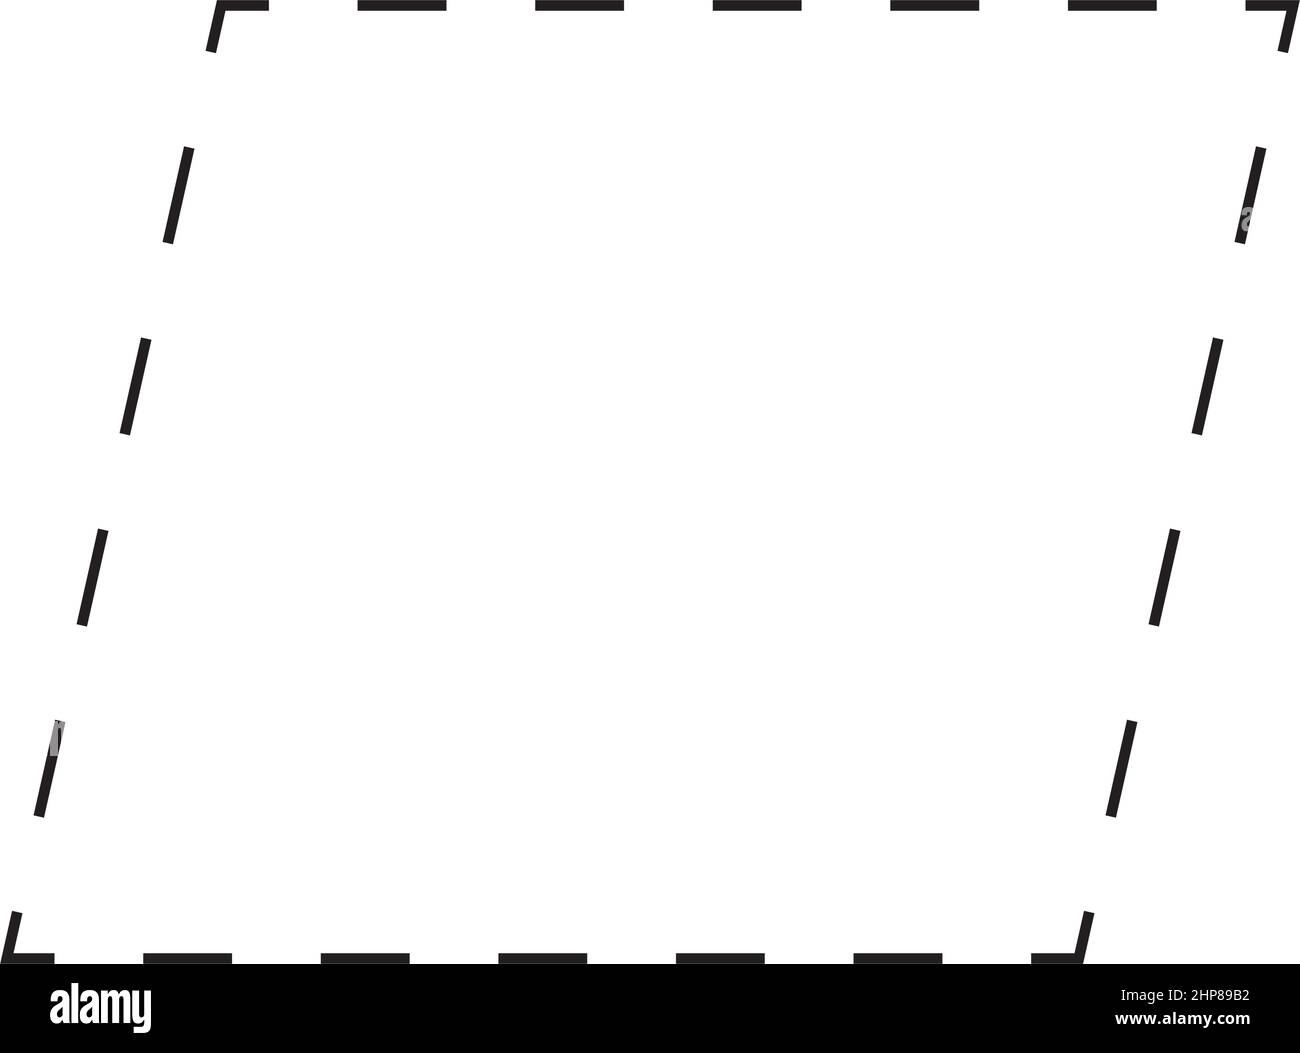 Parallelogrammform gestricheltes Symbol Vektor-Symbol für kreatives Grafikdesign ui-Element in einer Piktogramm-Illustration Stock Vektor